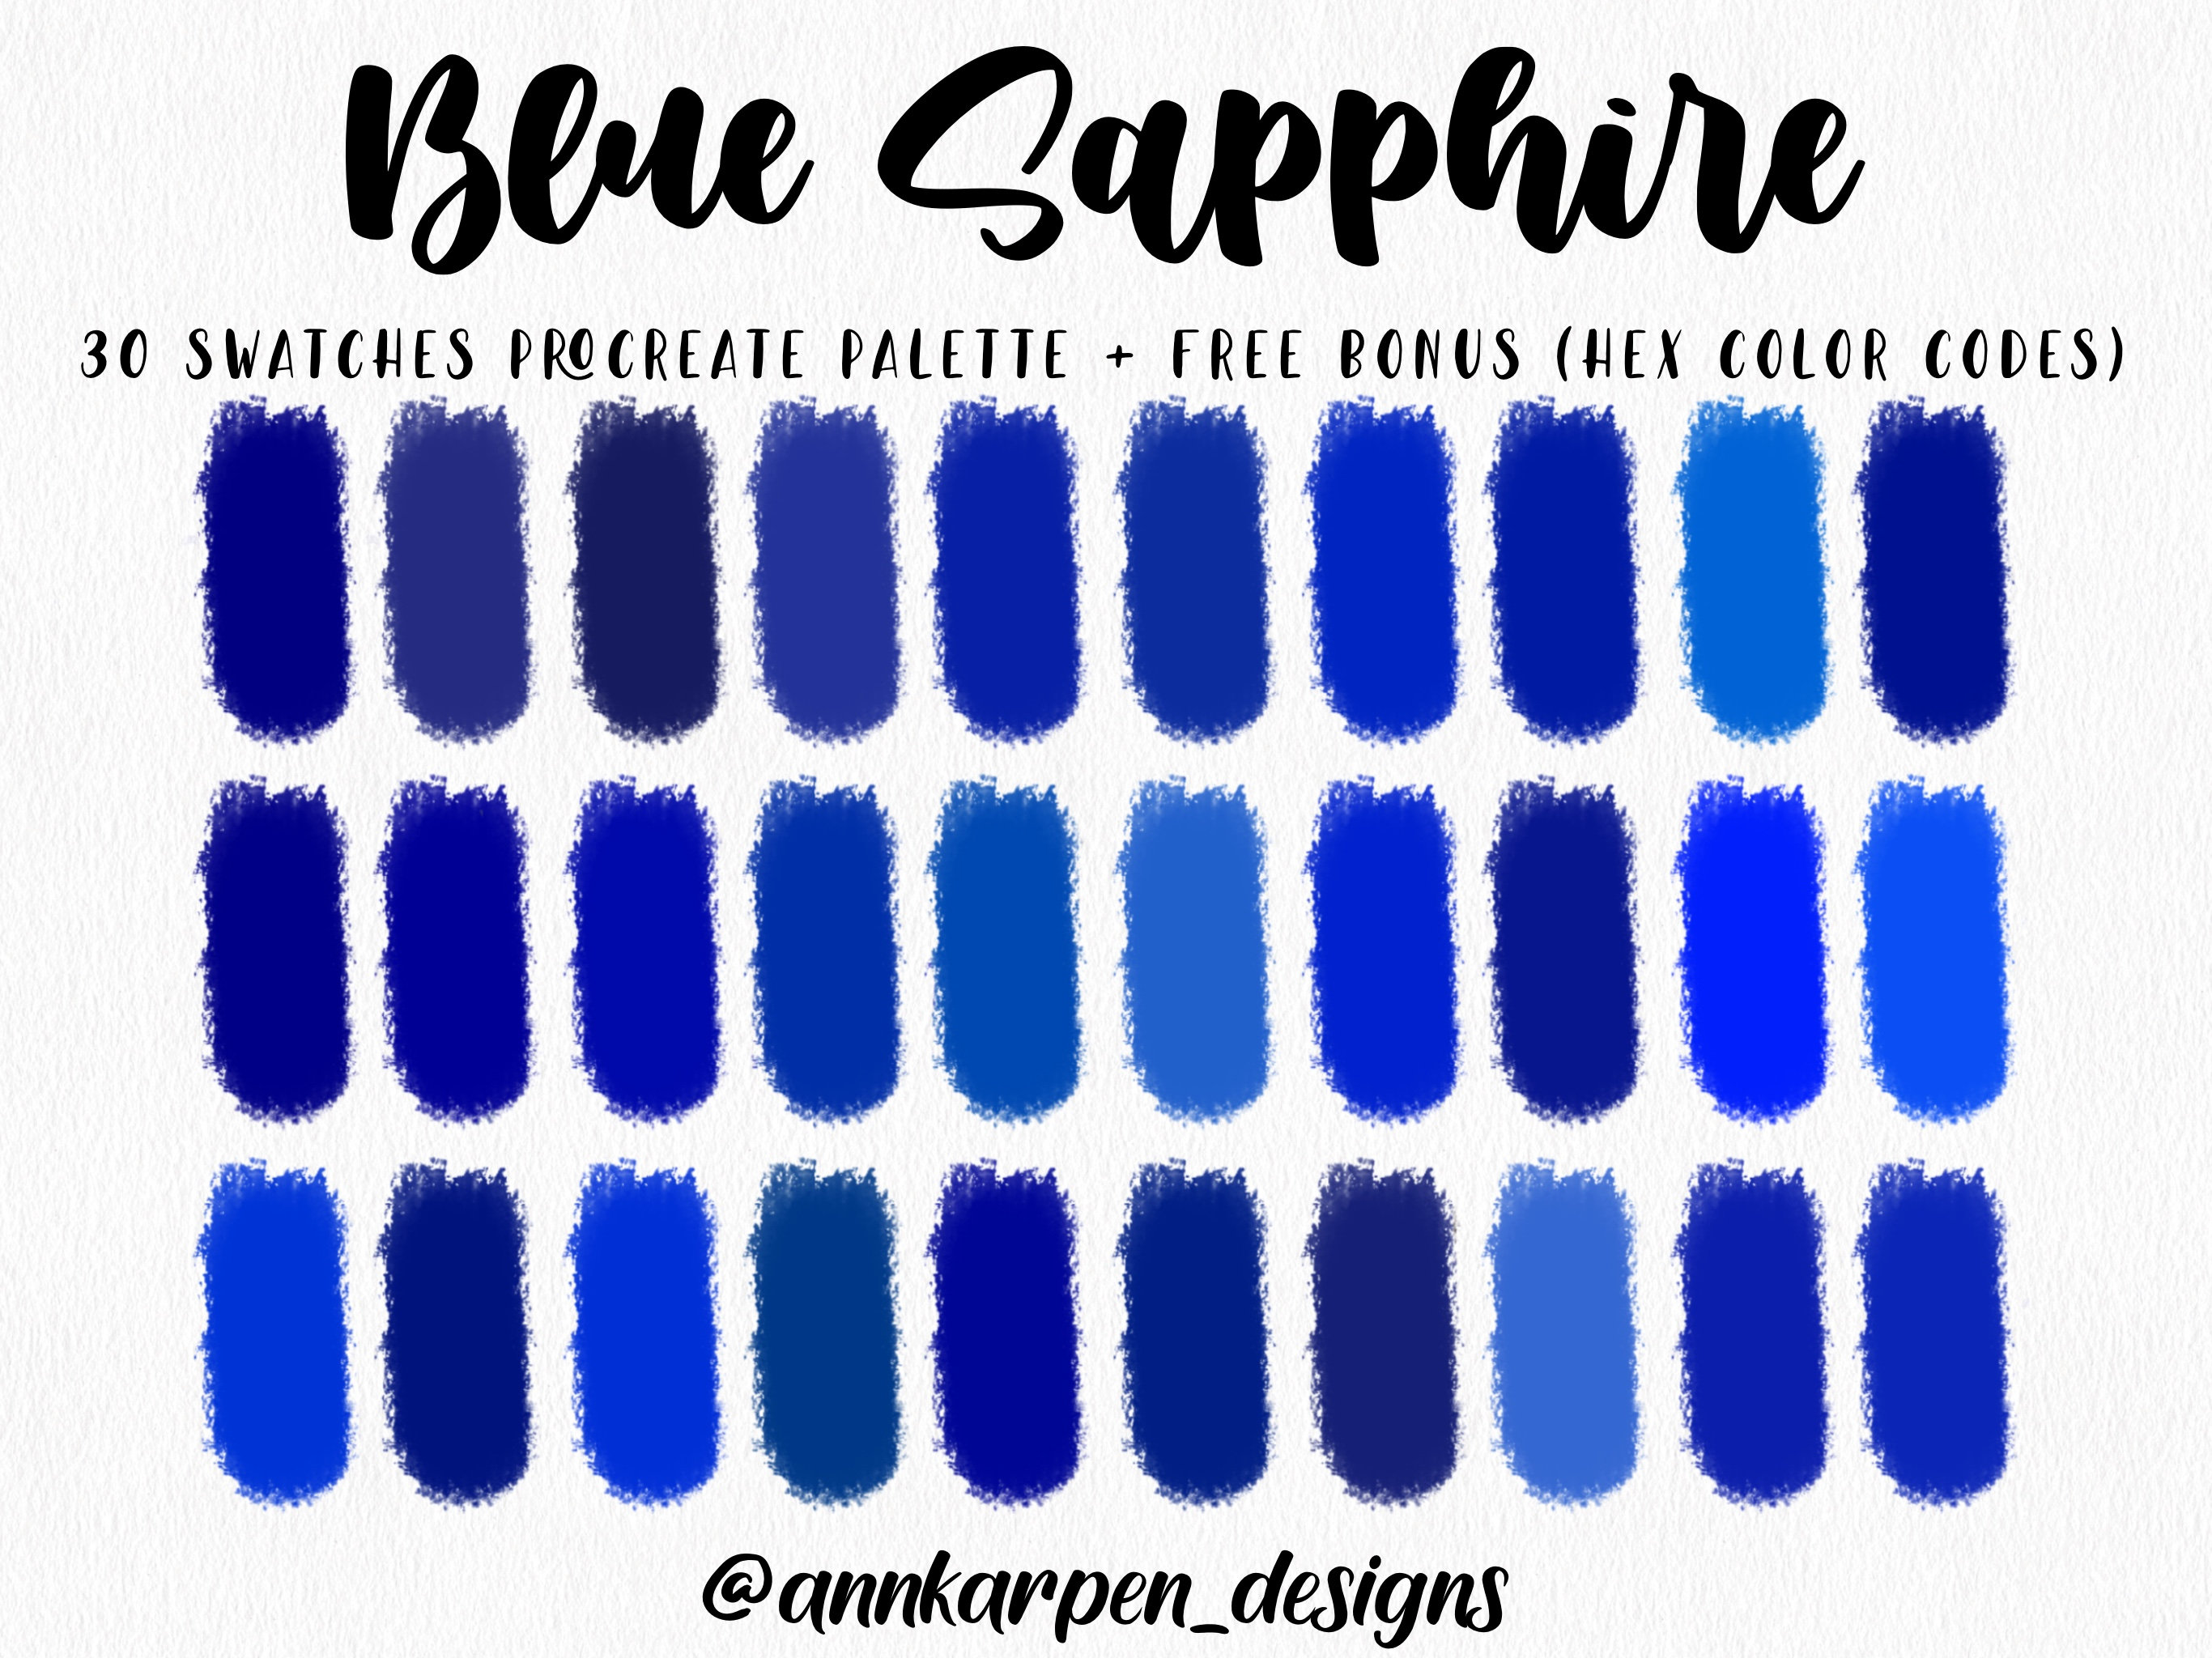 1. Ion Sapphire Blue Semi Permanent Hair Color - wide 10